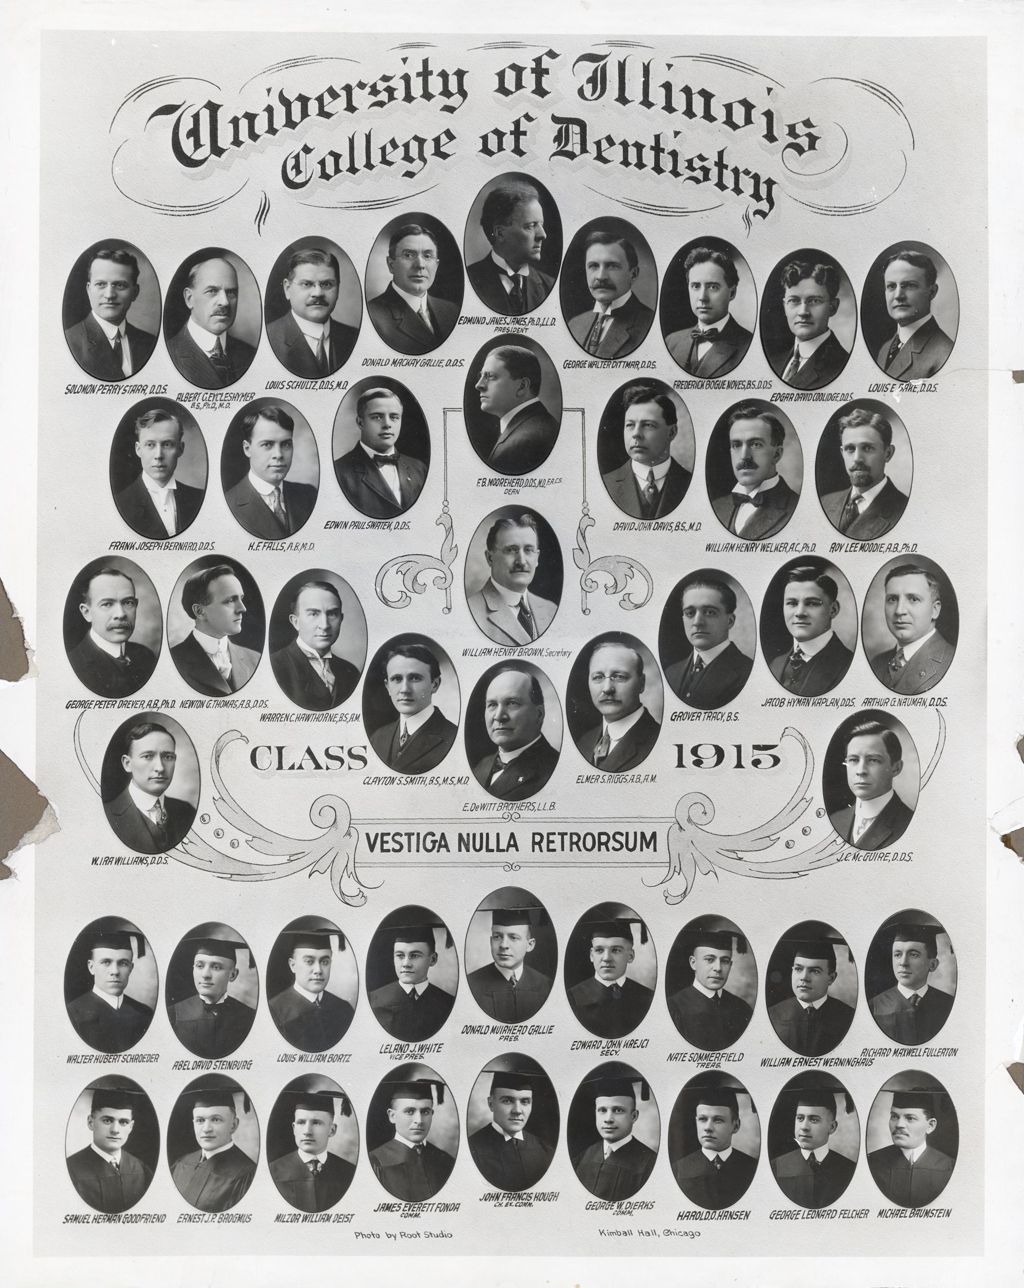 1915 graduating class, University of Illinois College of Dentistry